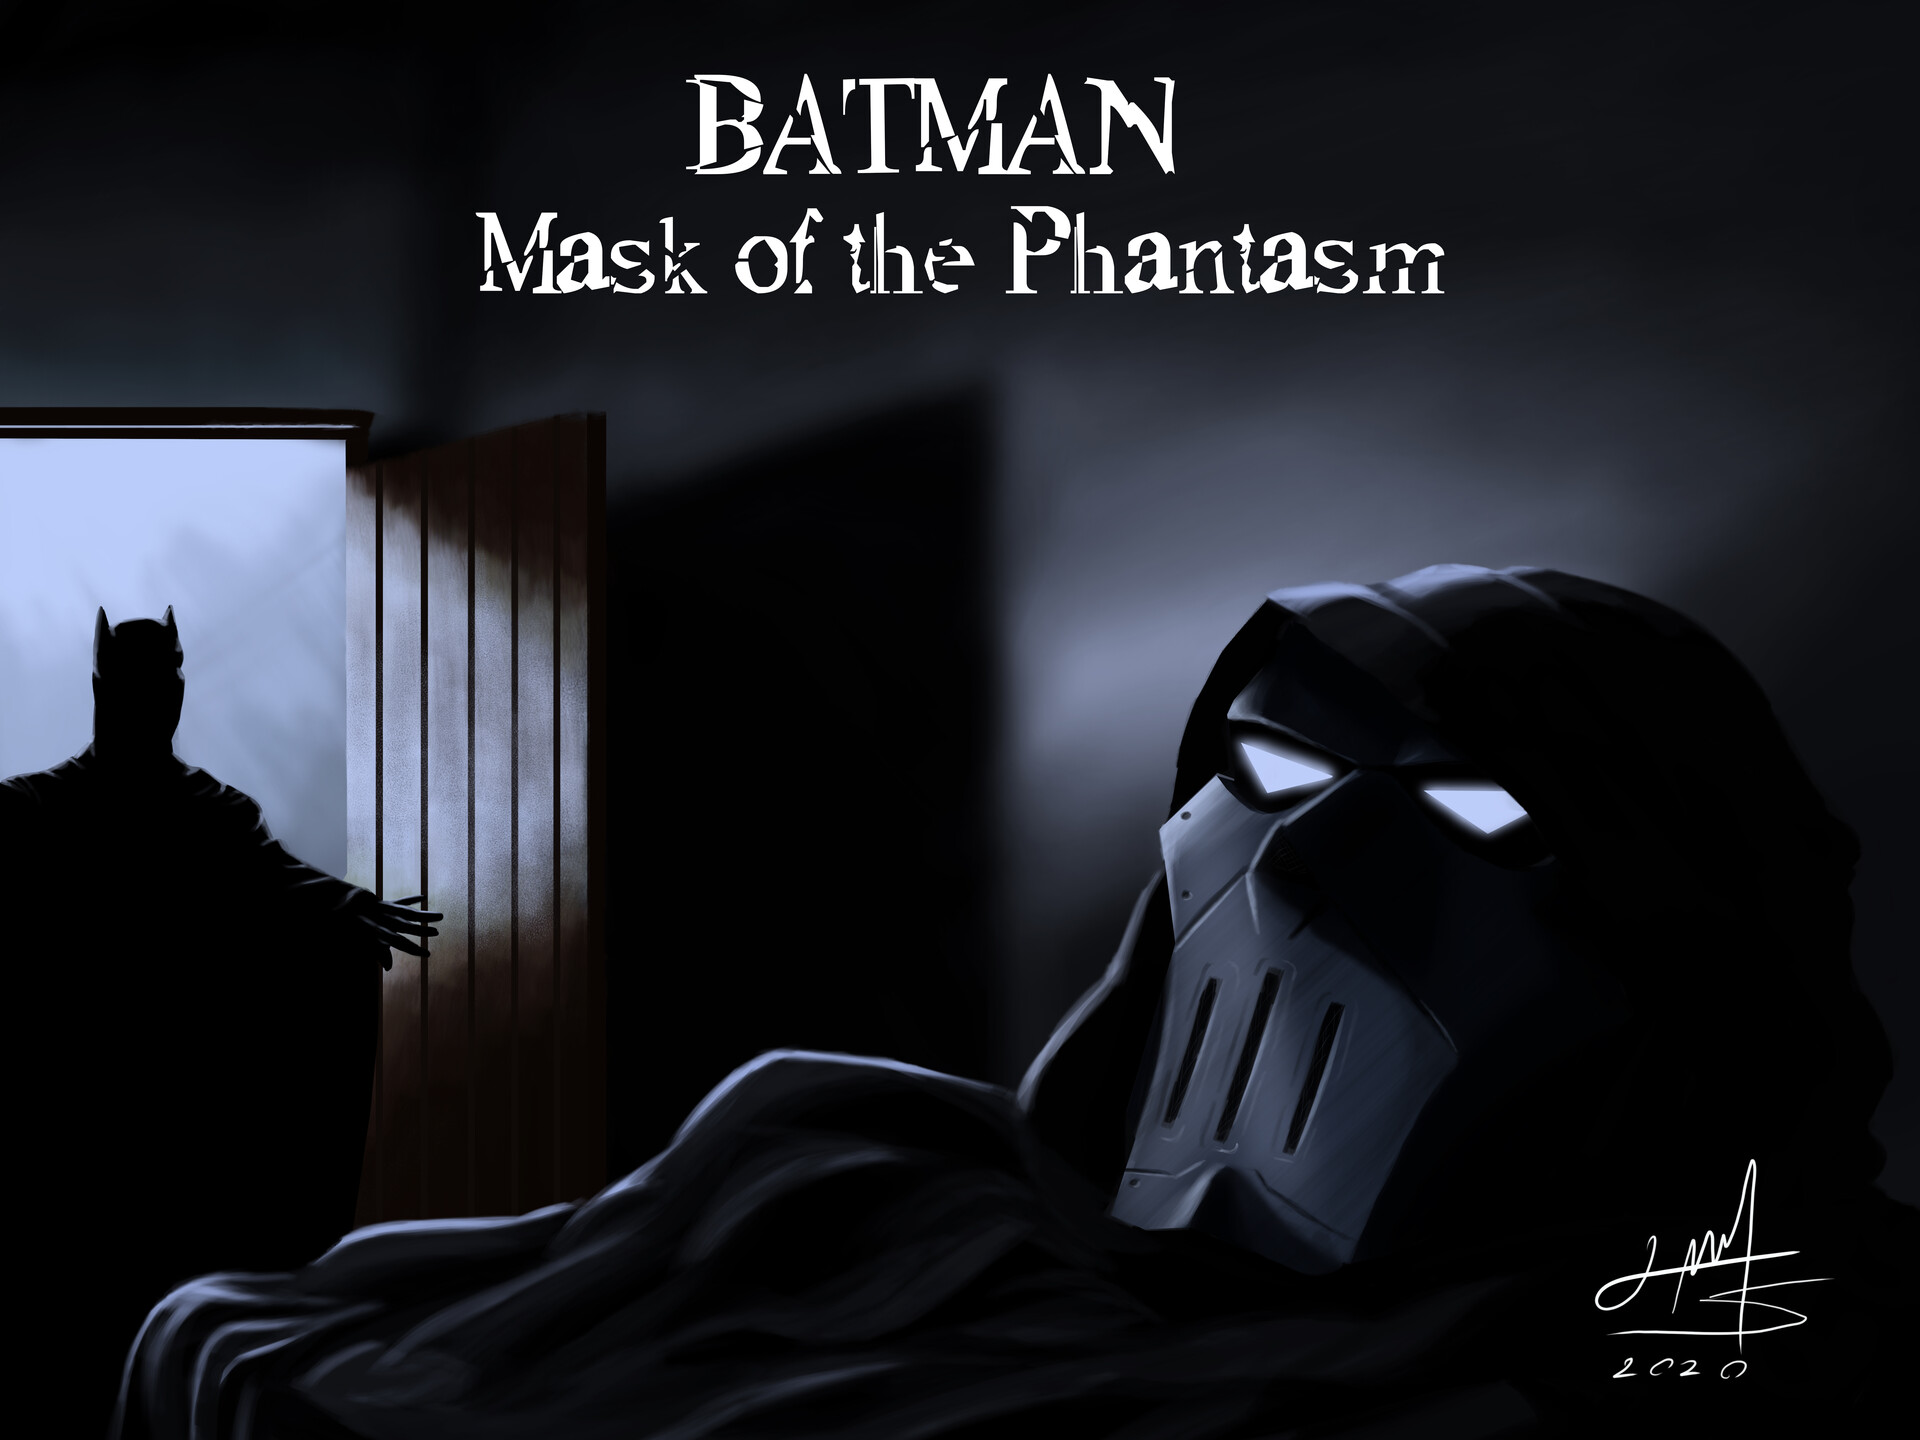 ArtStation - BATMAN: Mask of the Phantasm Poster